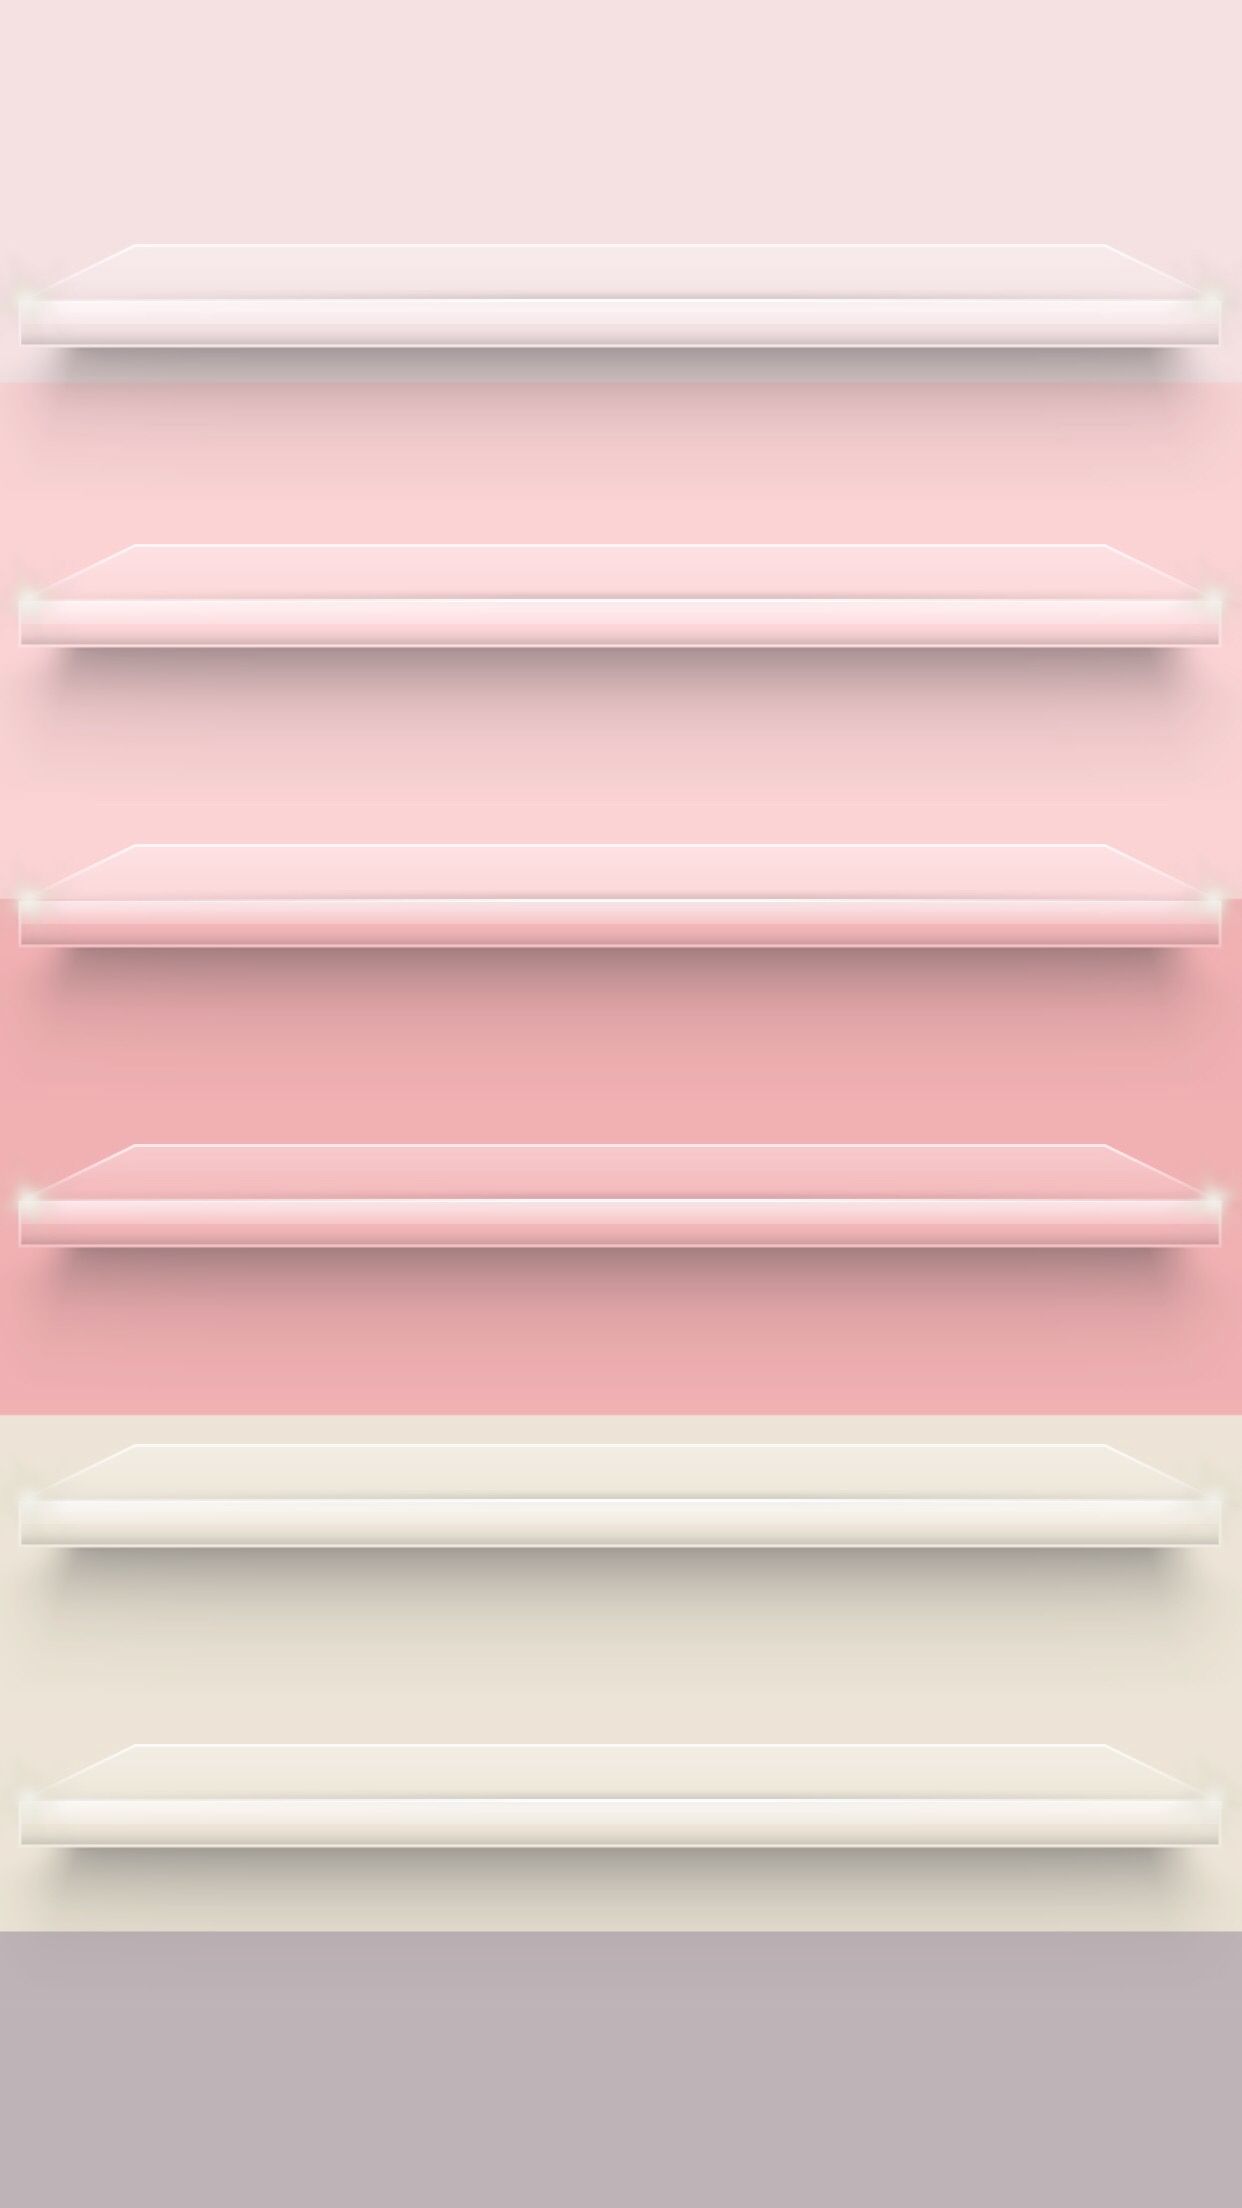 iphone home wallpaper,shelf,pink,shelving,line,rectangle